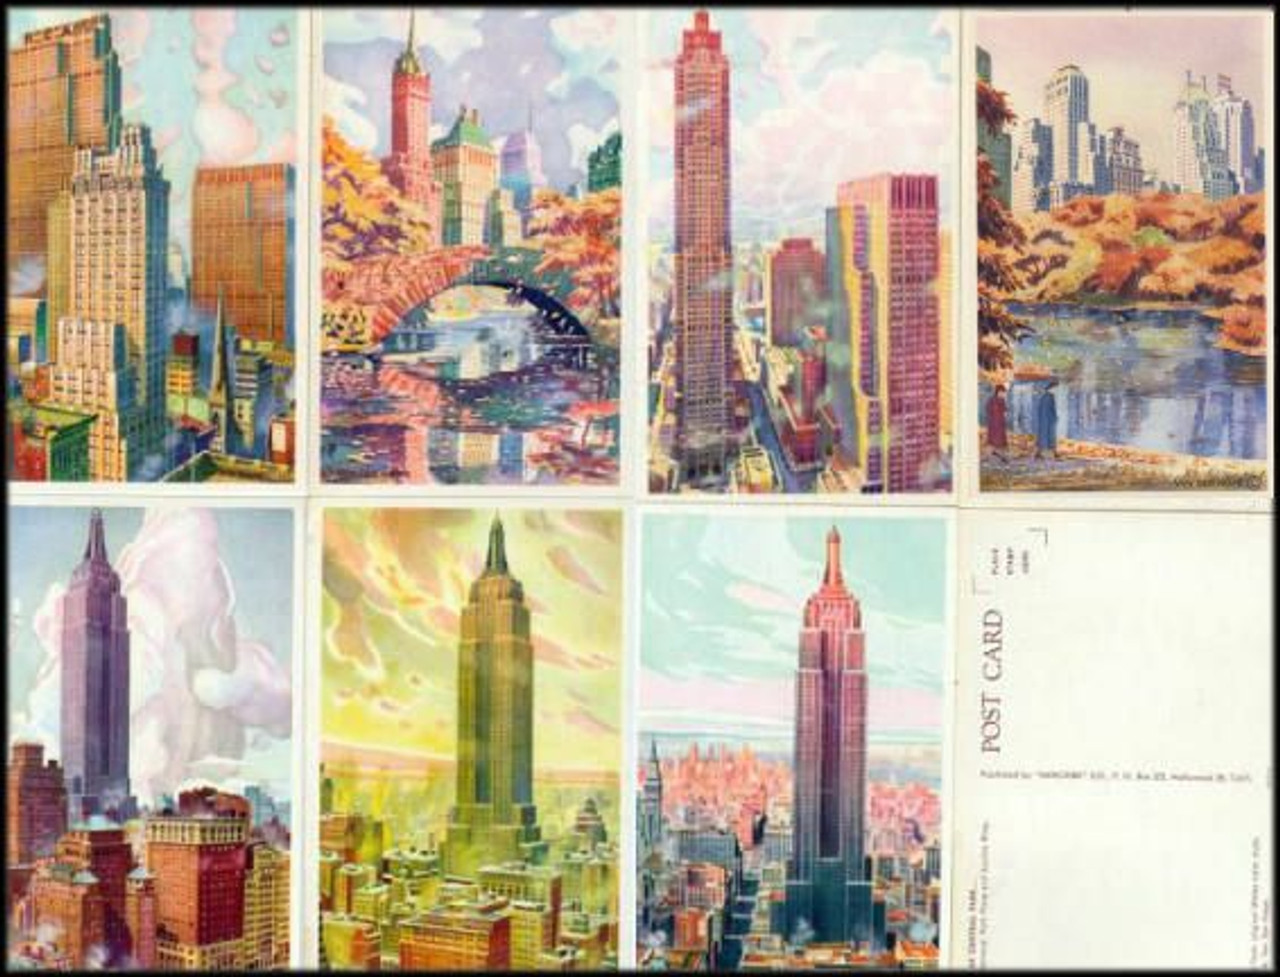 Vintage New York City Postcard Set